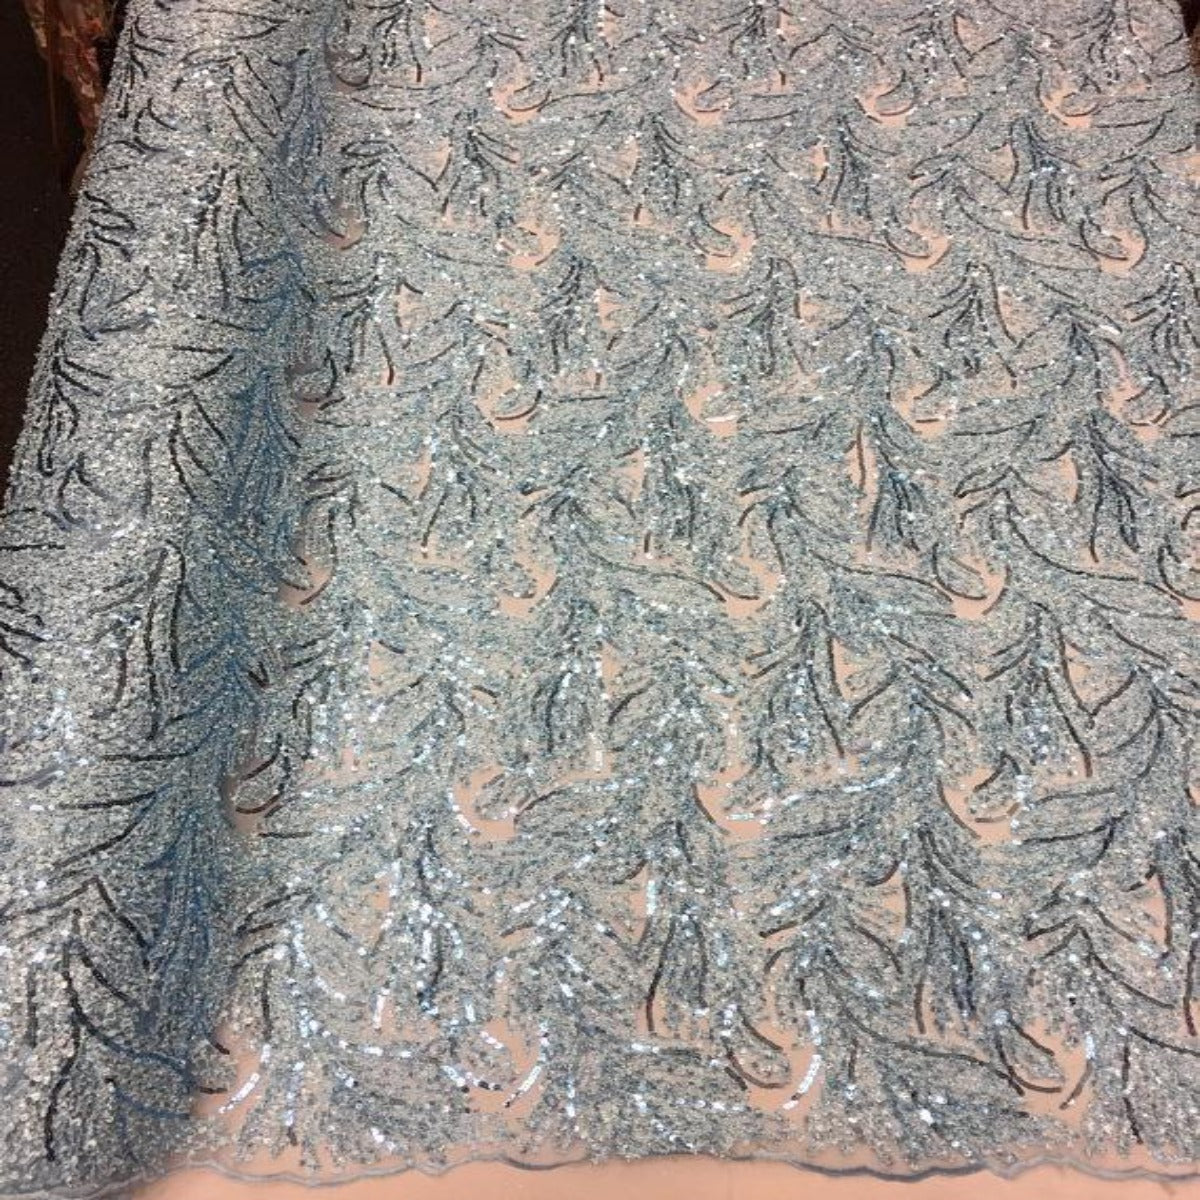 Navy Blue Cozy Pop Thread Floral Sequins Lace Fabric - Fashion Fabrics LLC